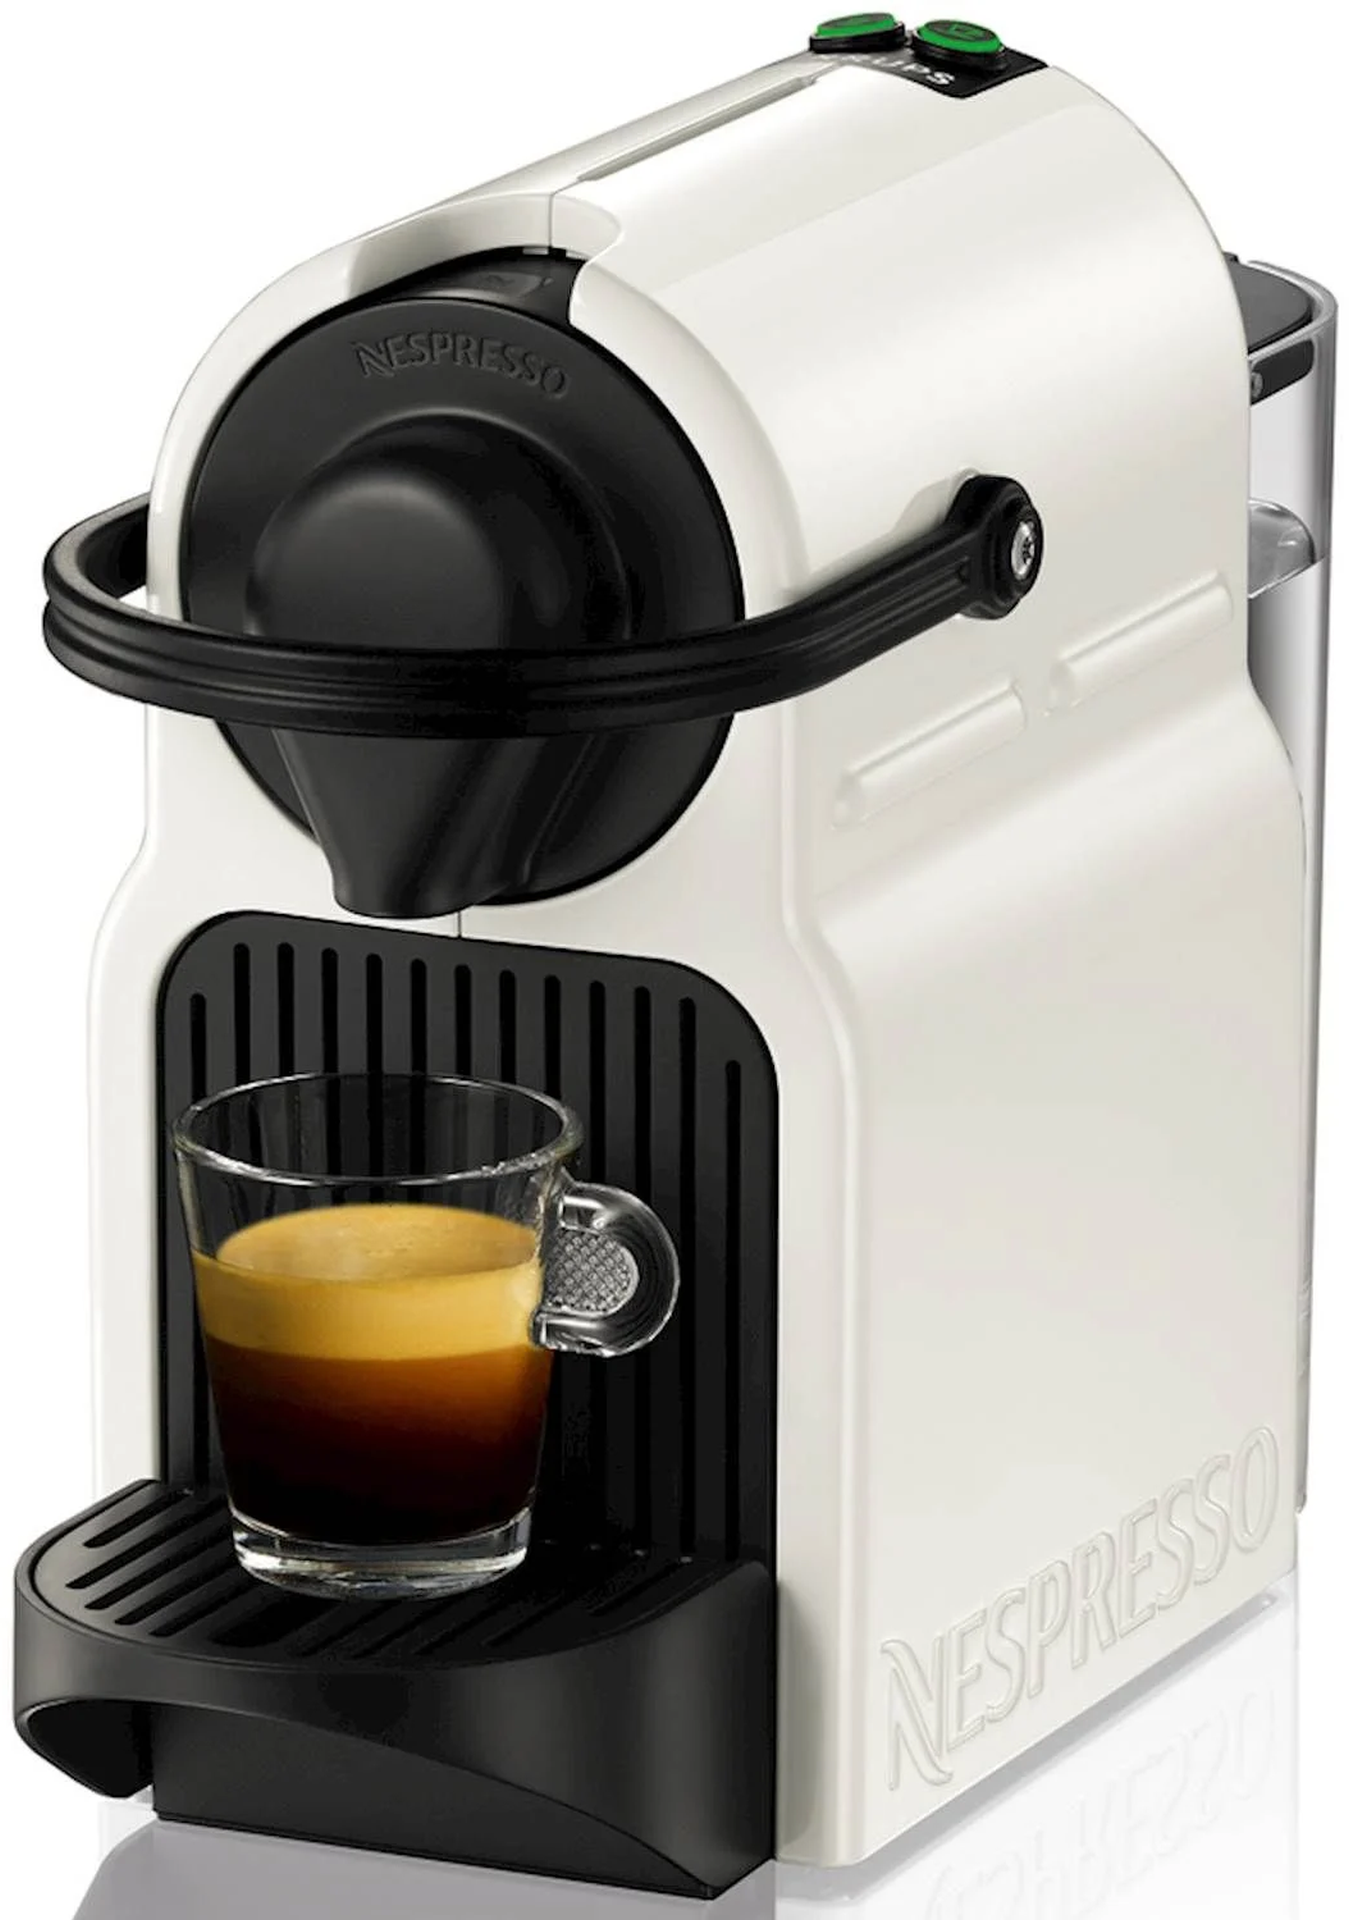 10942216223 Nespresso Inissia white - Kapselmaskine Husholdning,Kaffe,Kapsel kaffemaskiner 2100009390 Inissia white